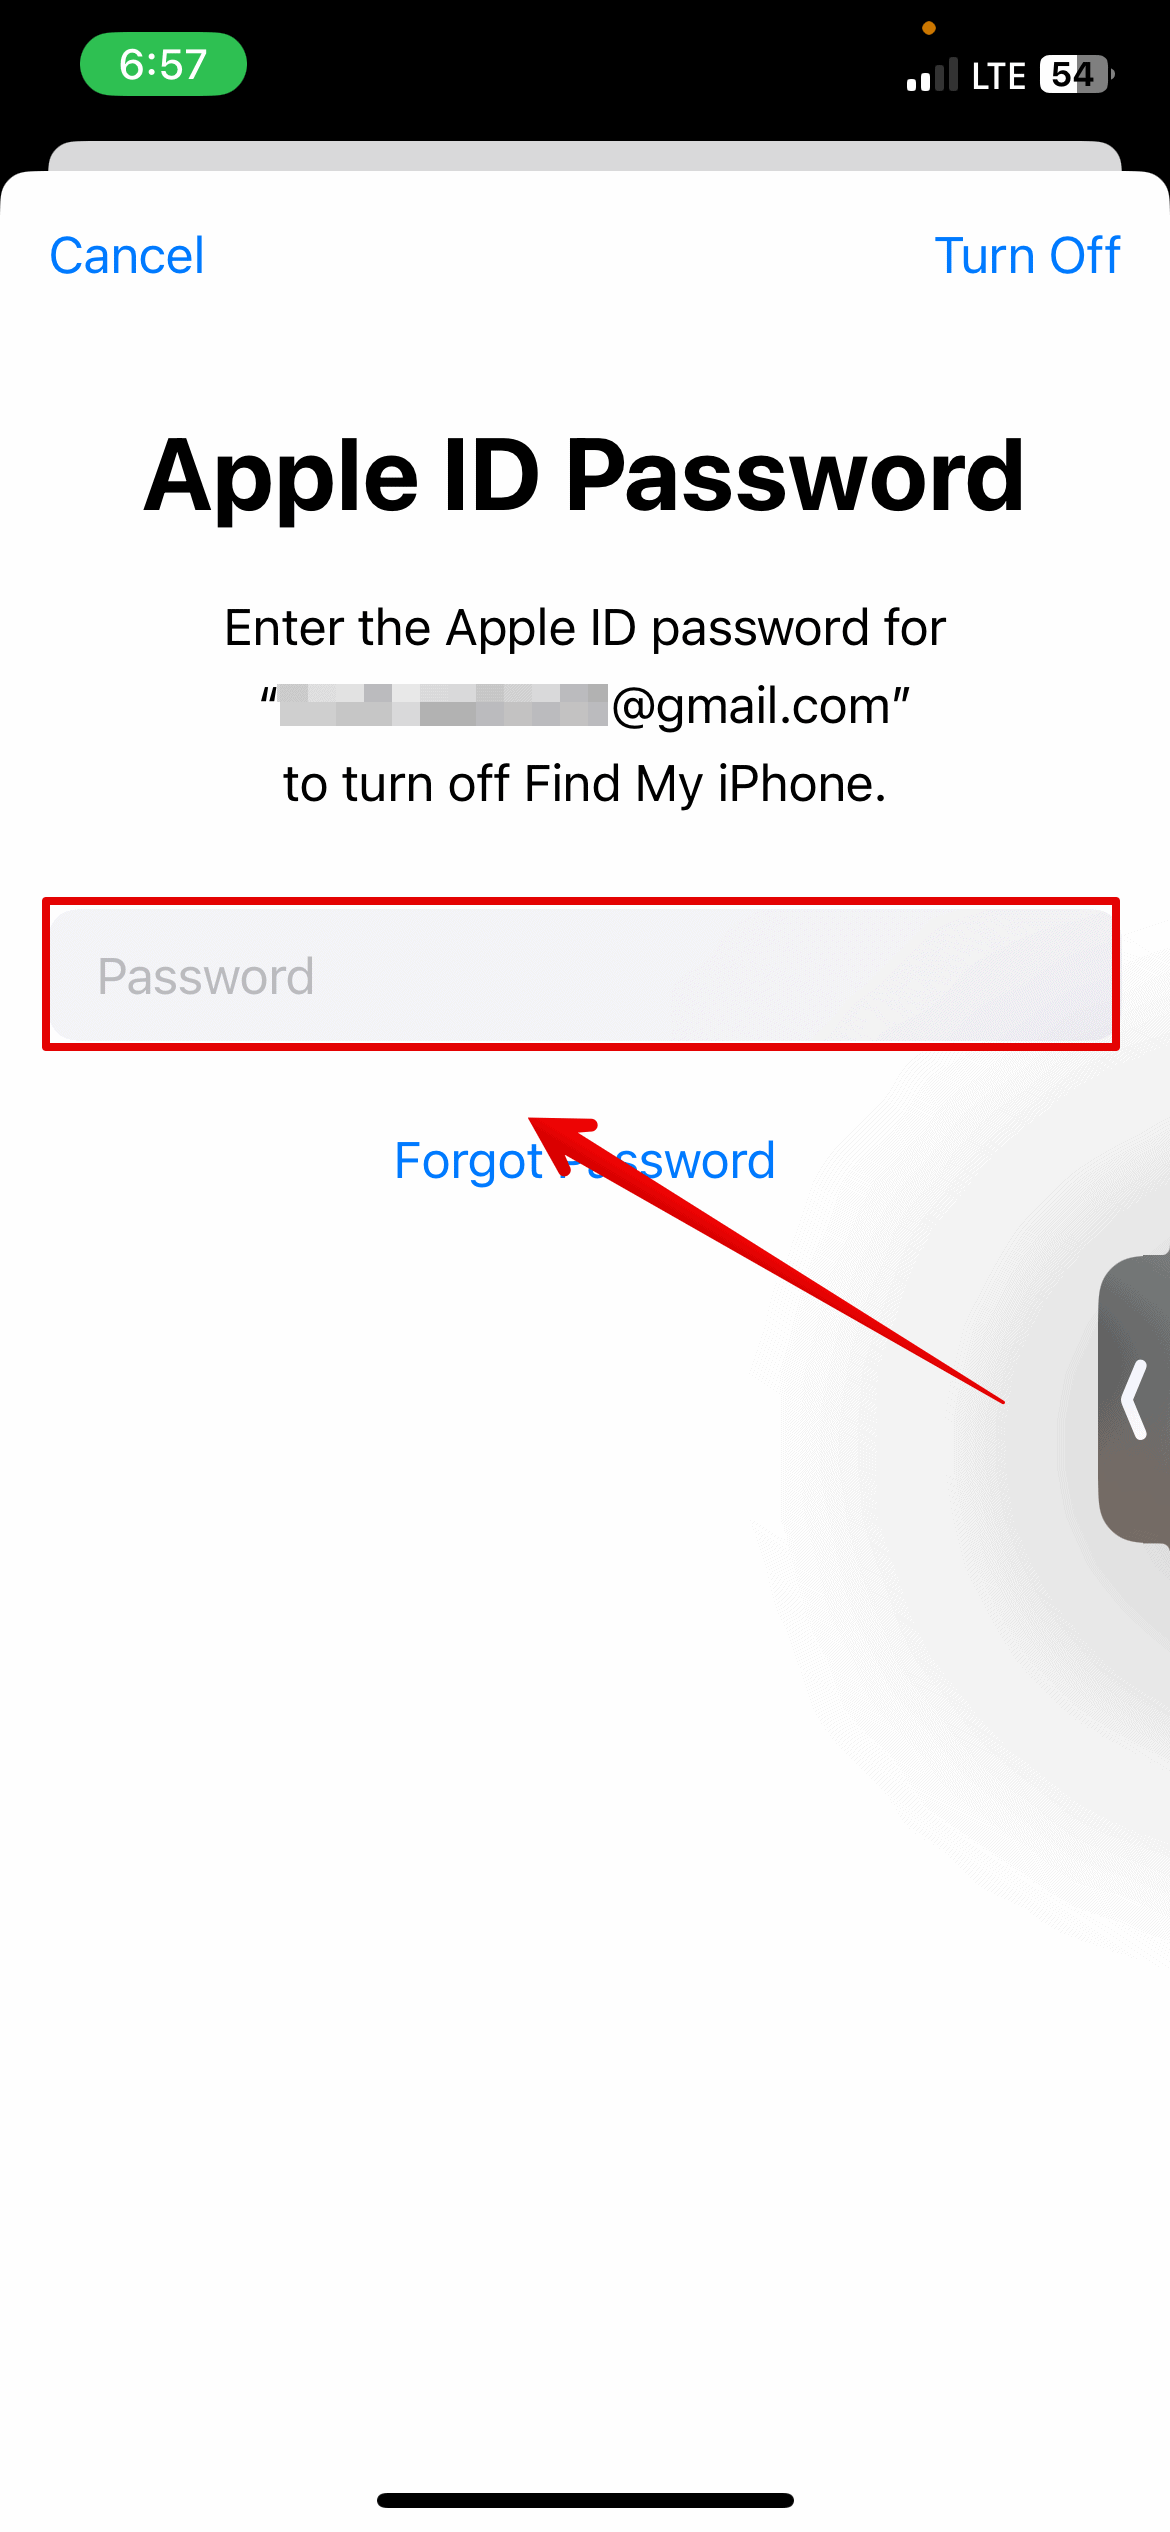 Enter Apple ID password